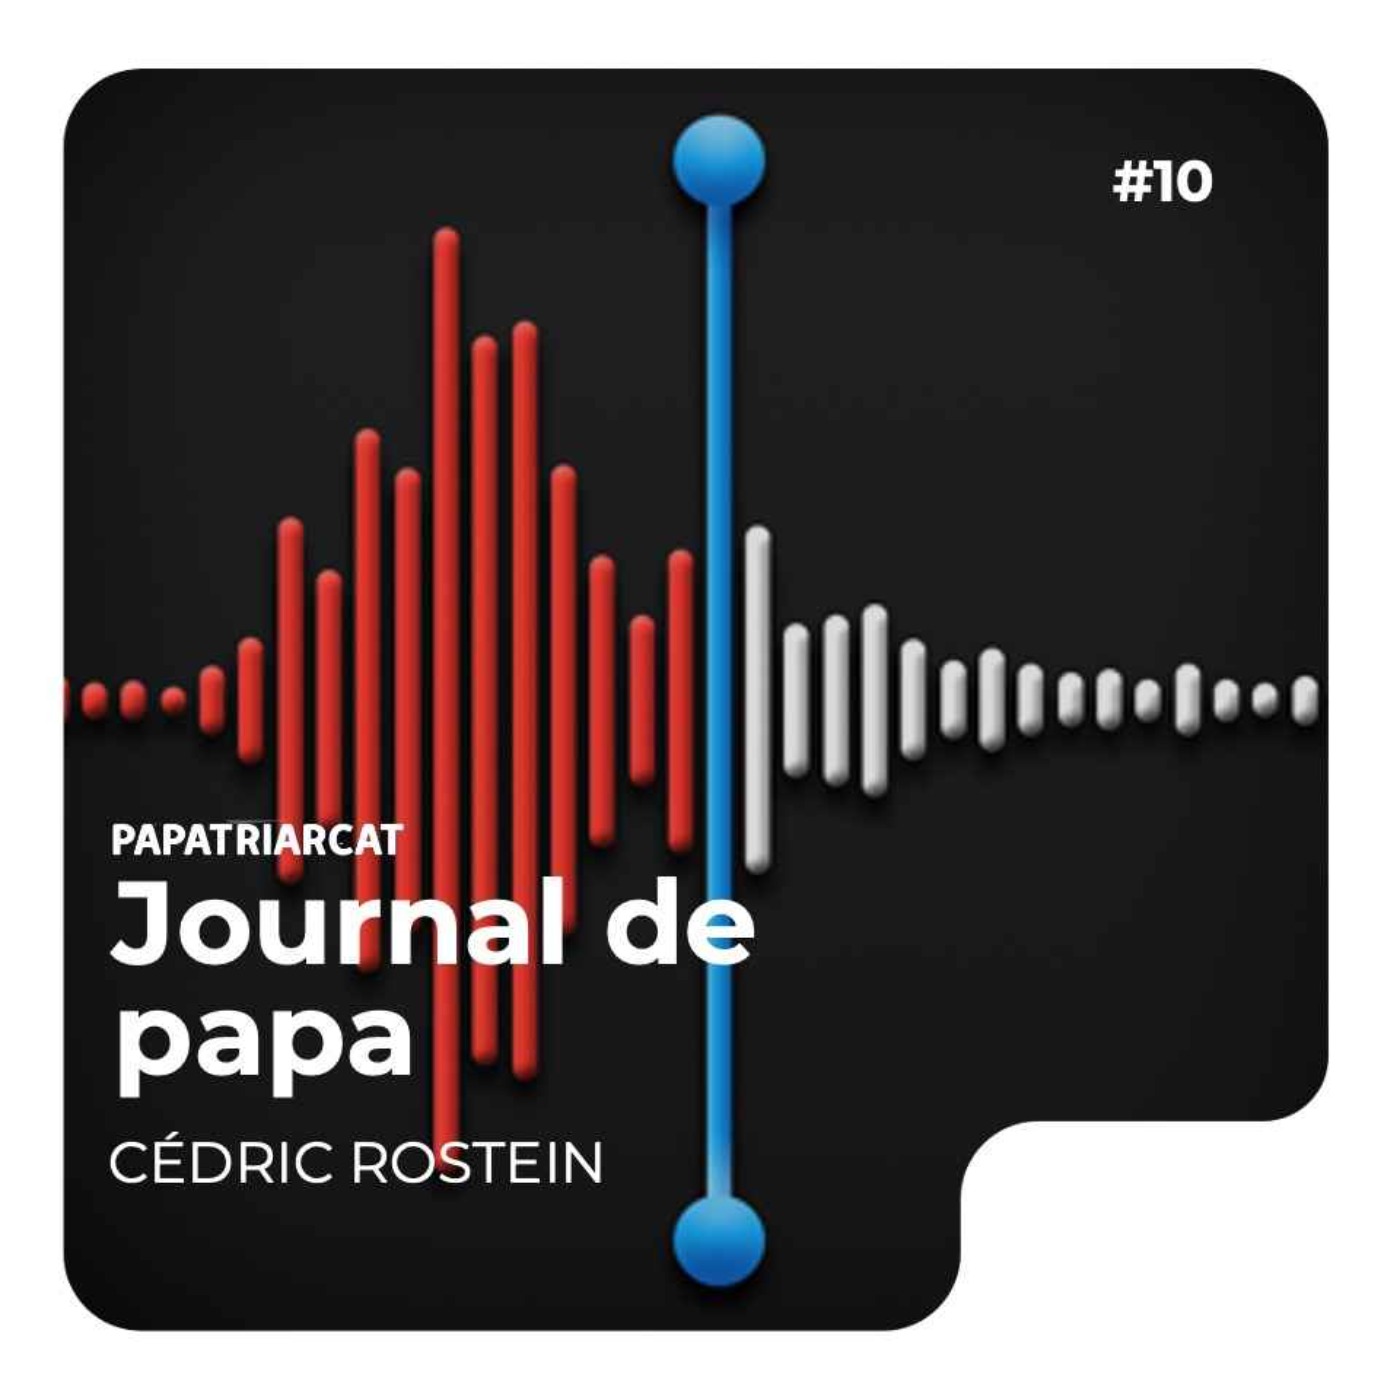 Journal de papa #10